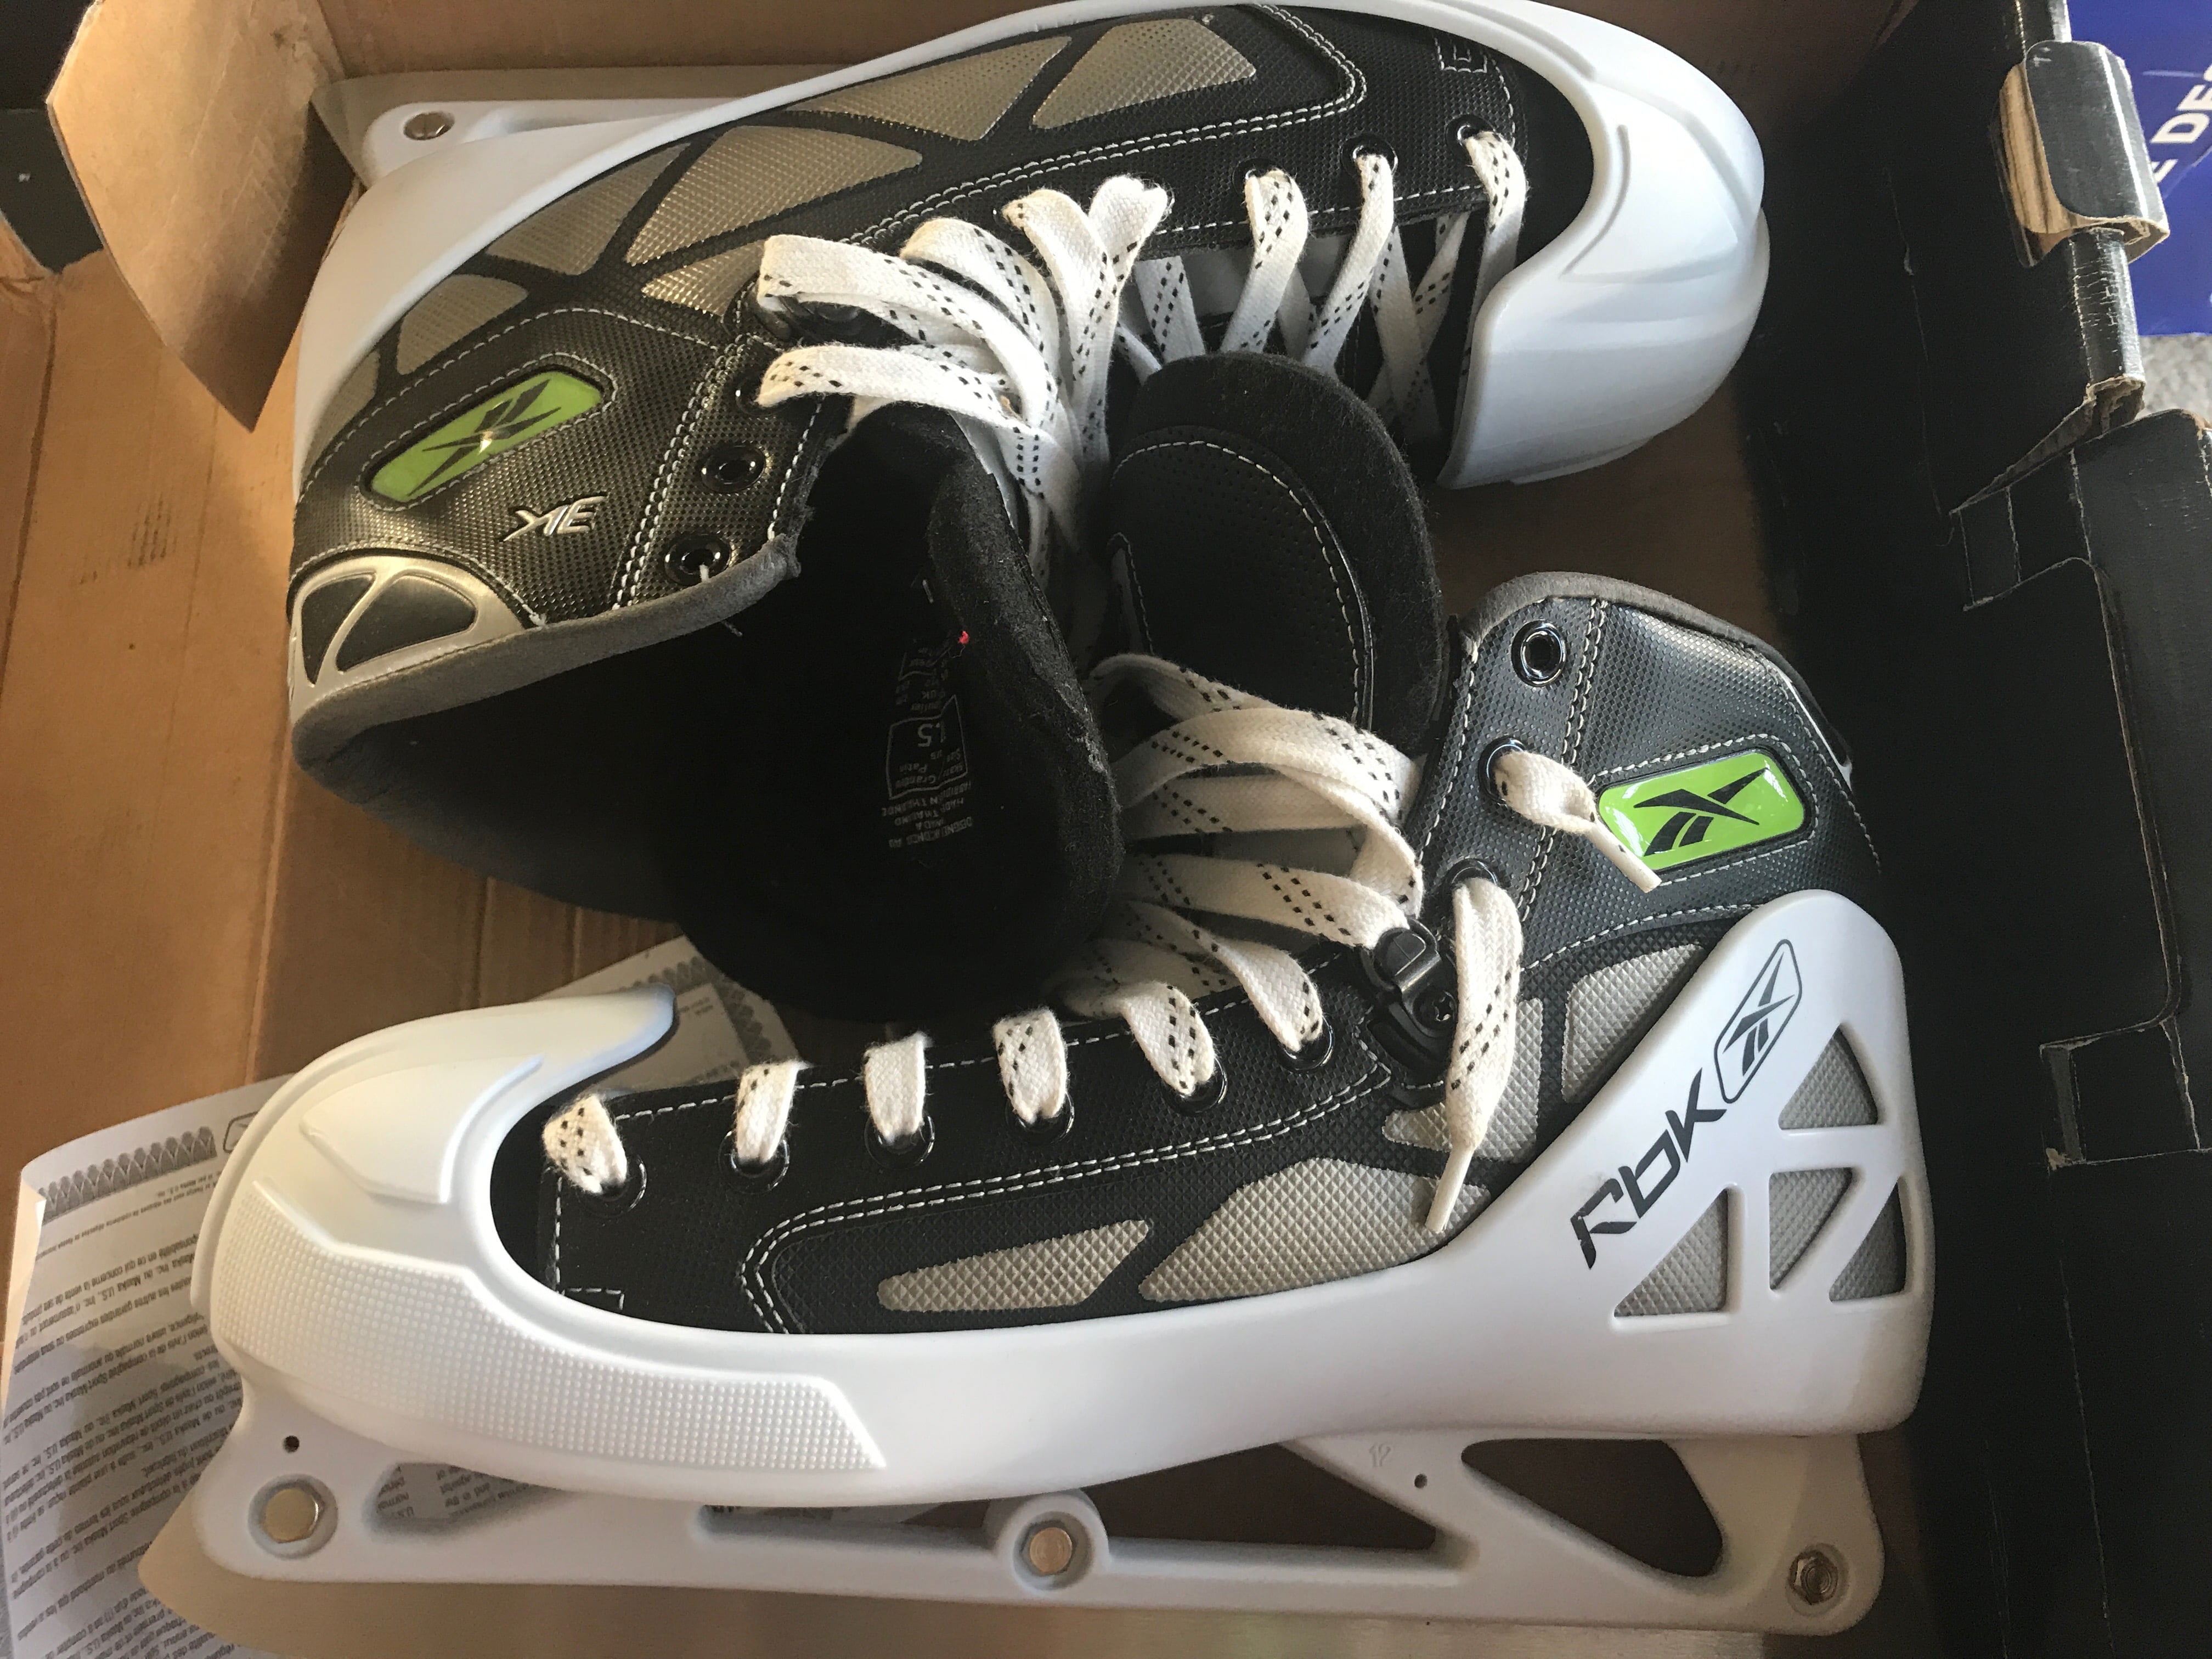 reebok 3k ice skates review